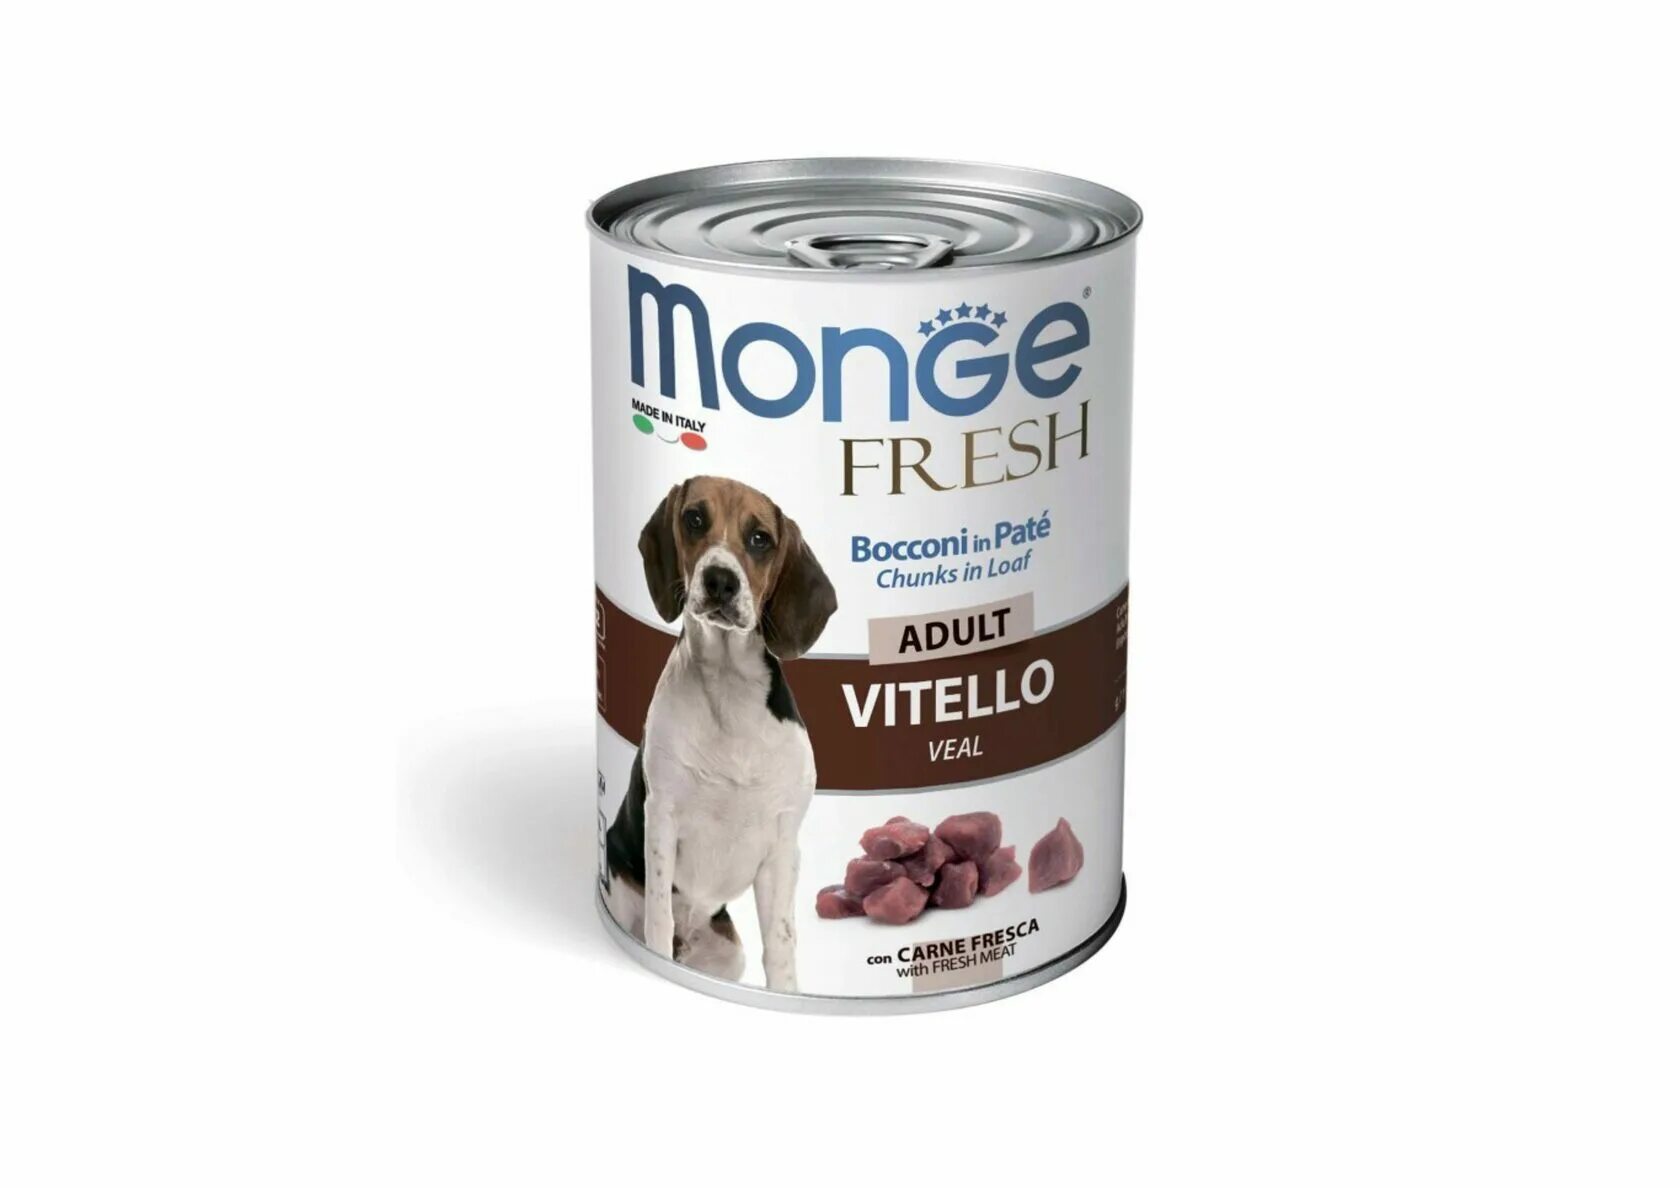 Корм для собак в банках. Монж Фреш консервы с ягненком для собак адалт 400 г. Монж консервы для щенков. Монж Фреш для собак консервы. Монже корм для собак влажный.